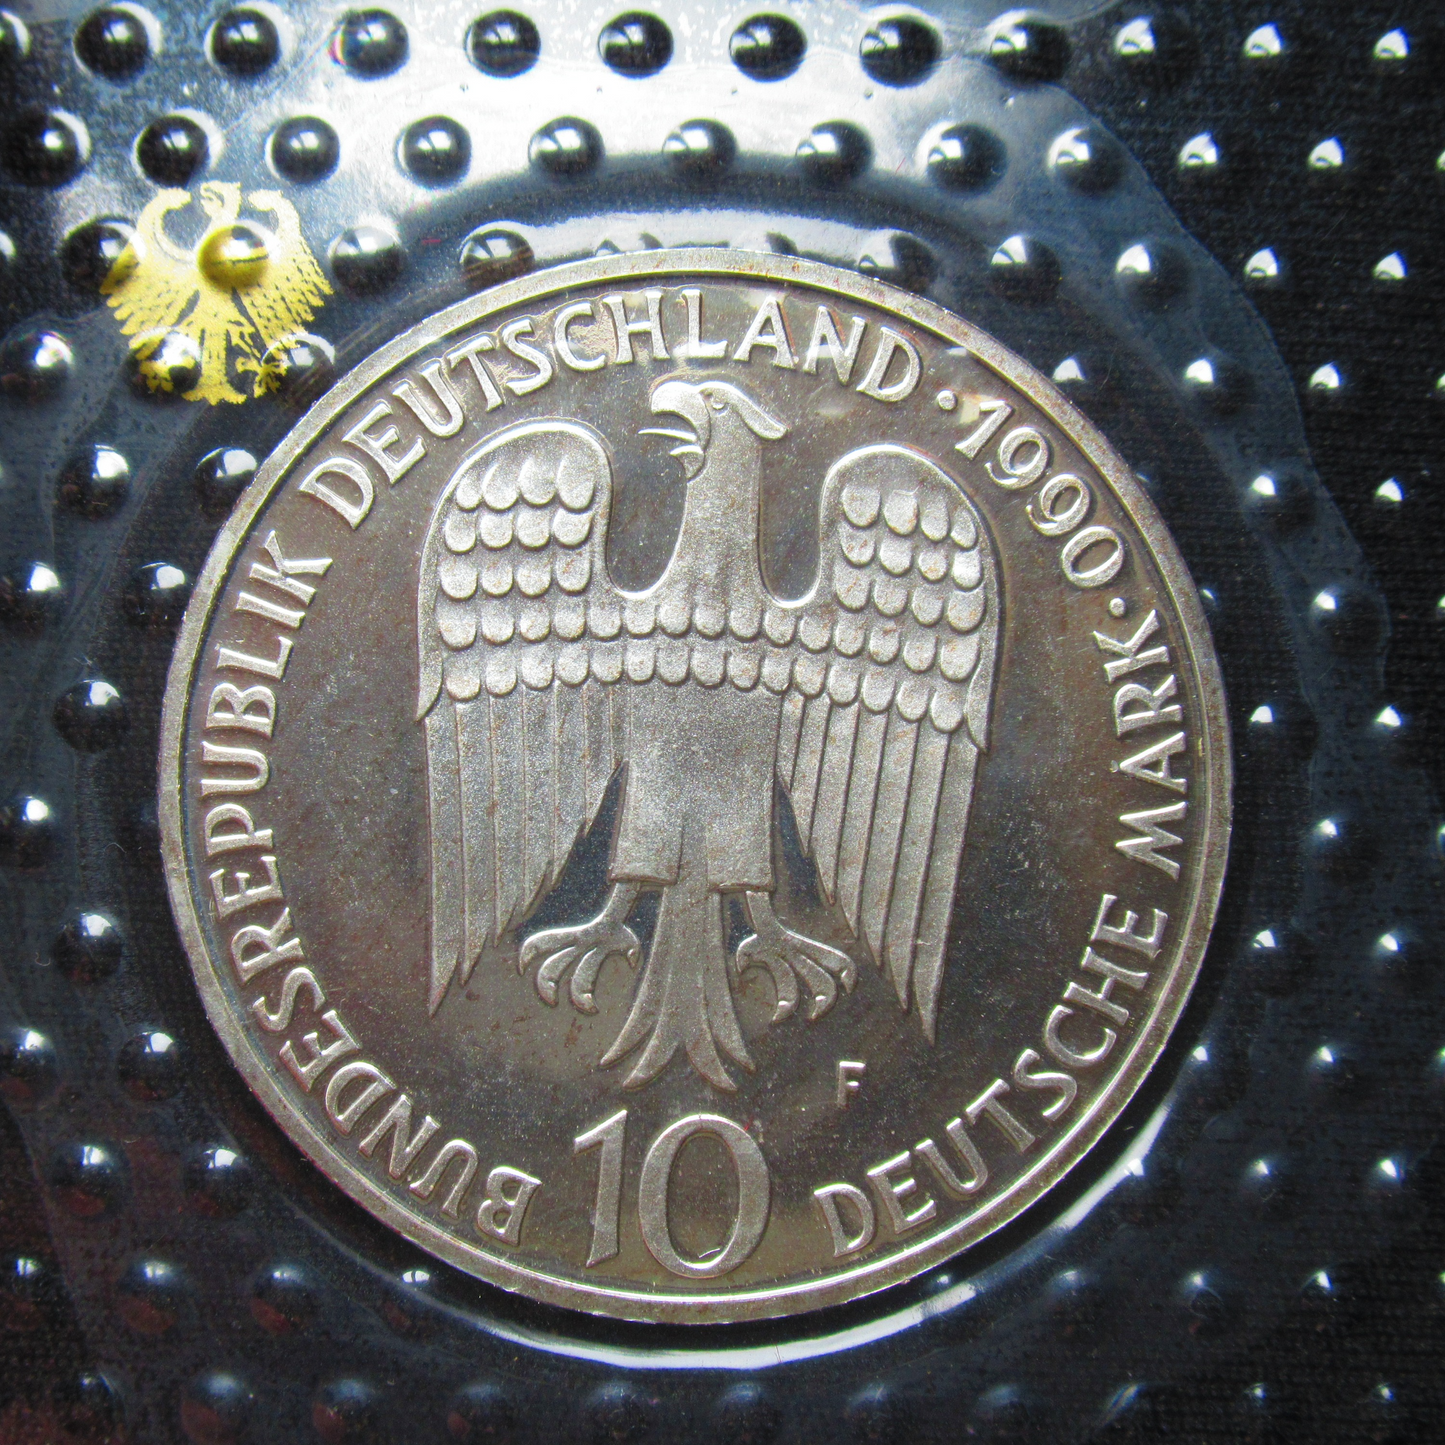 800TH ANNIVERSARY OF THE DEATH OF EMPEROR BARBAROSSA, series 10 DM silver coin mirror finish, 1990